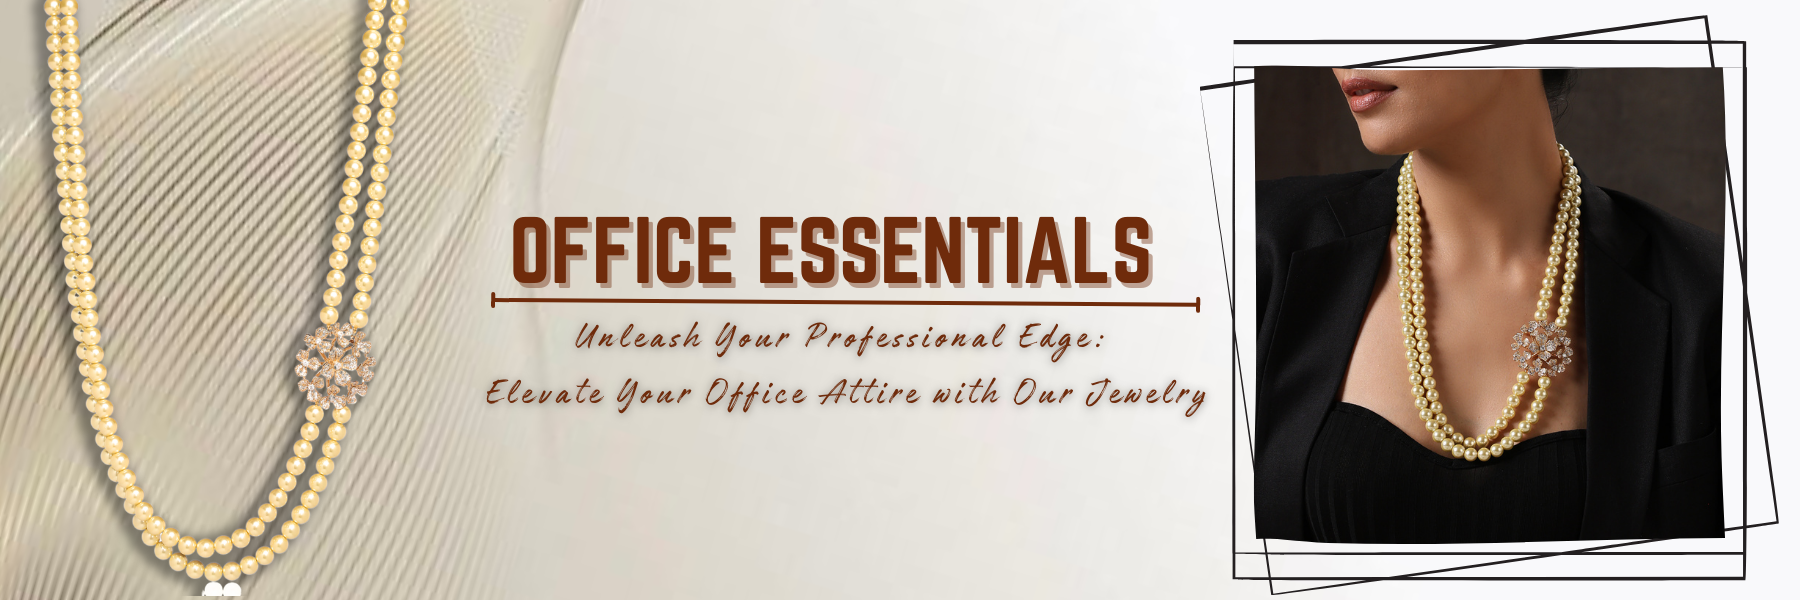 Minaki Office Essentials